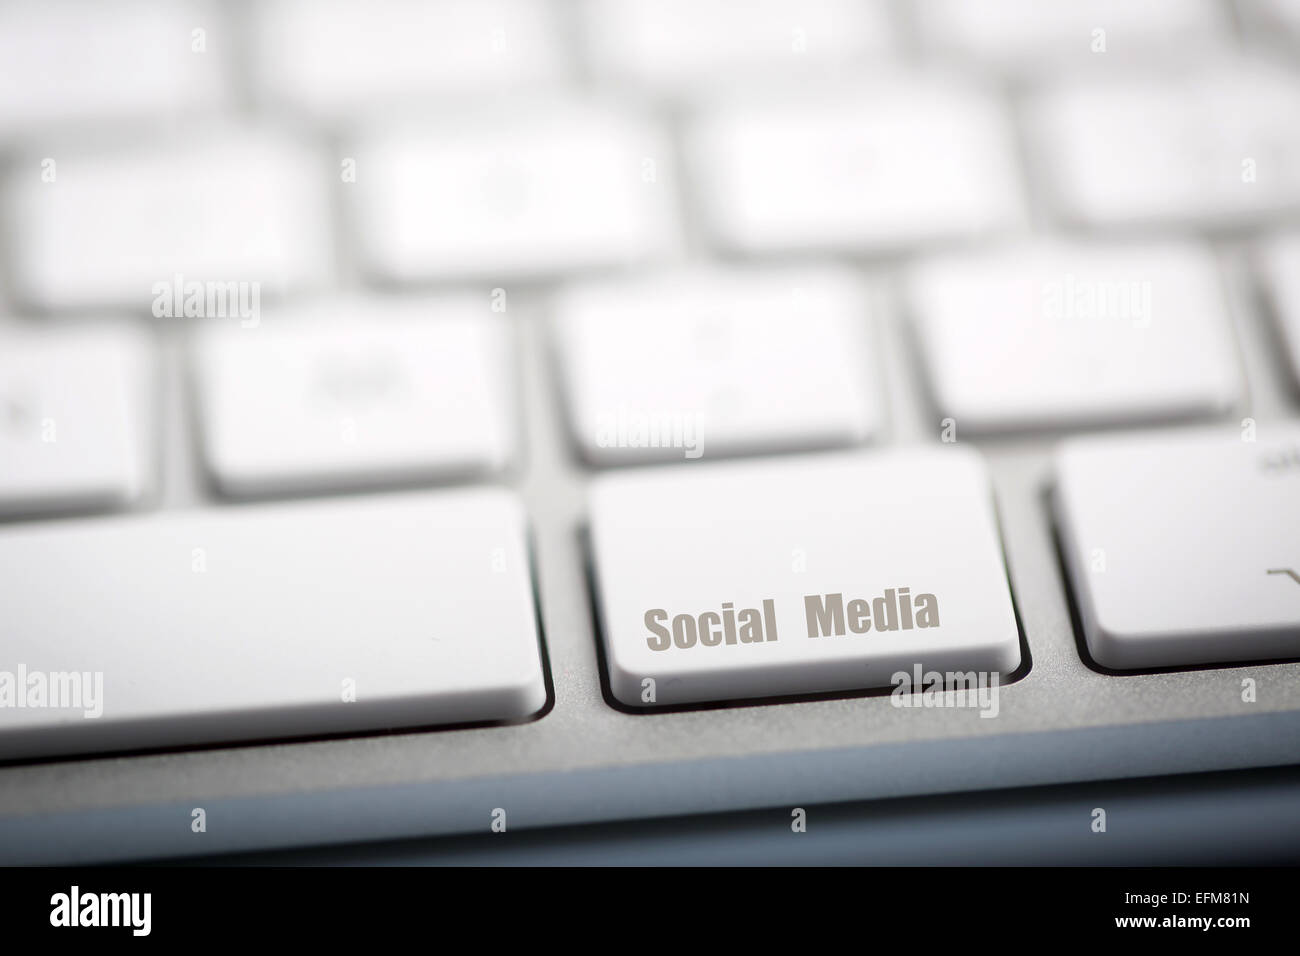 "Social Media" on metallic keyboard Stock Photo